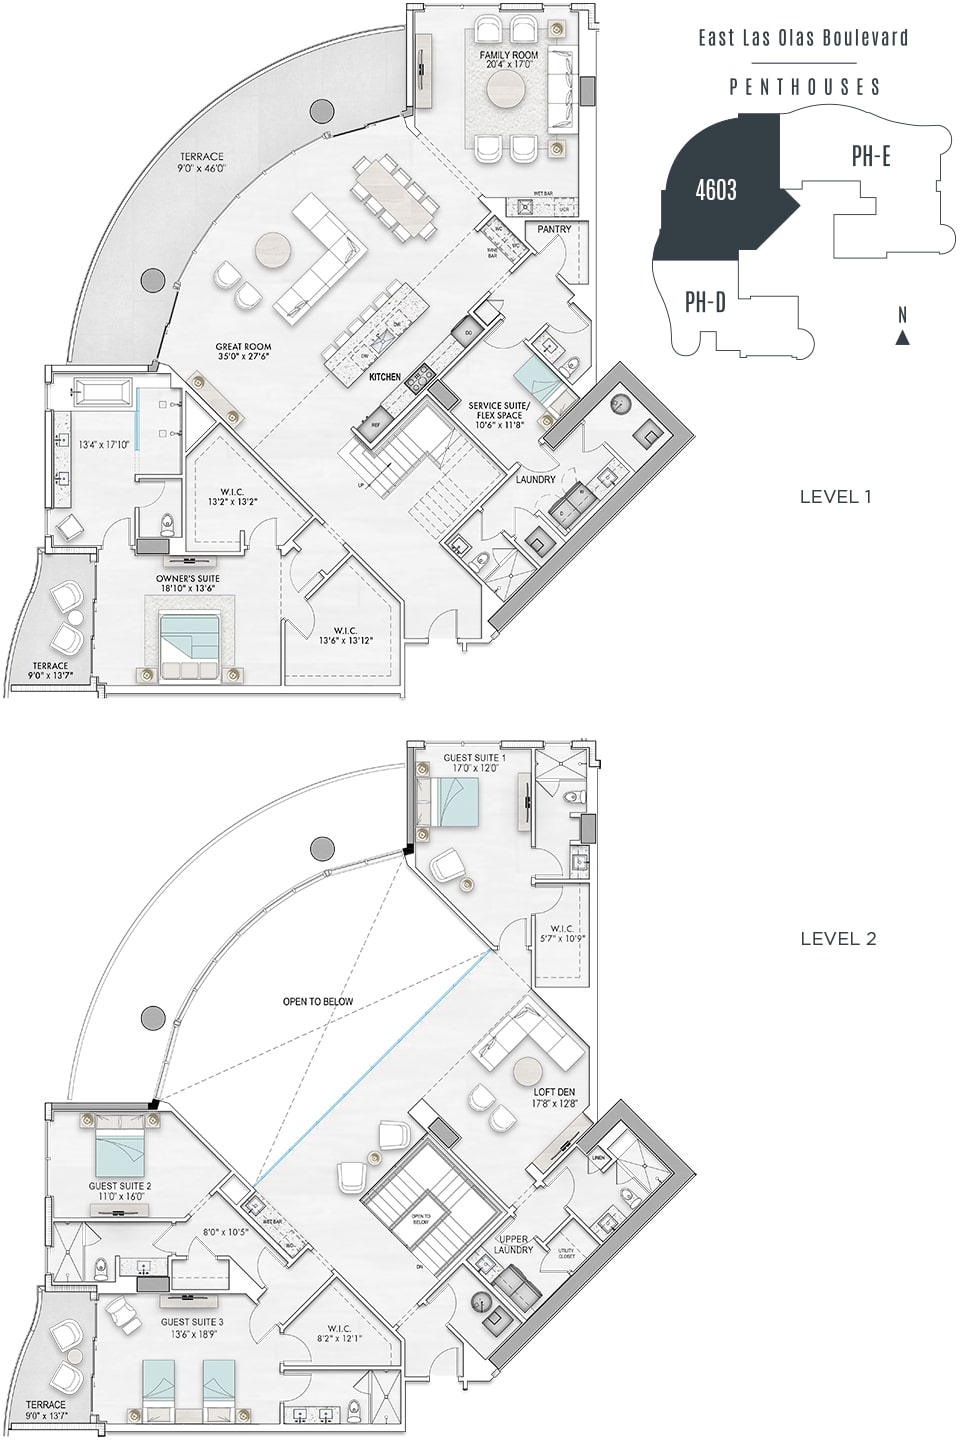 Floorplan of Penthouse 4603